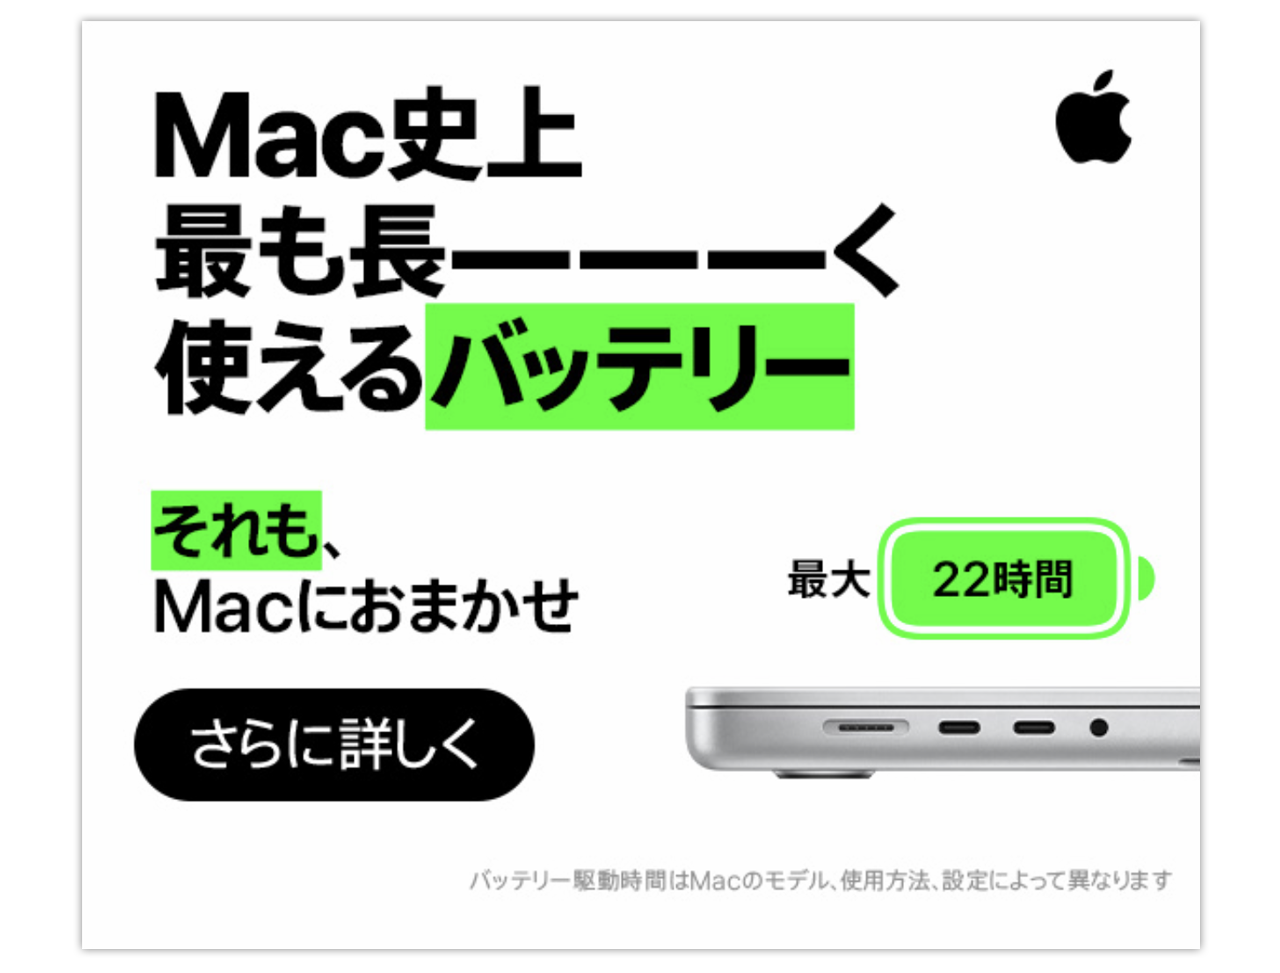 apple ads